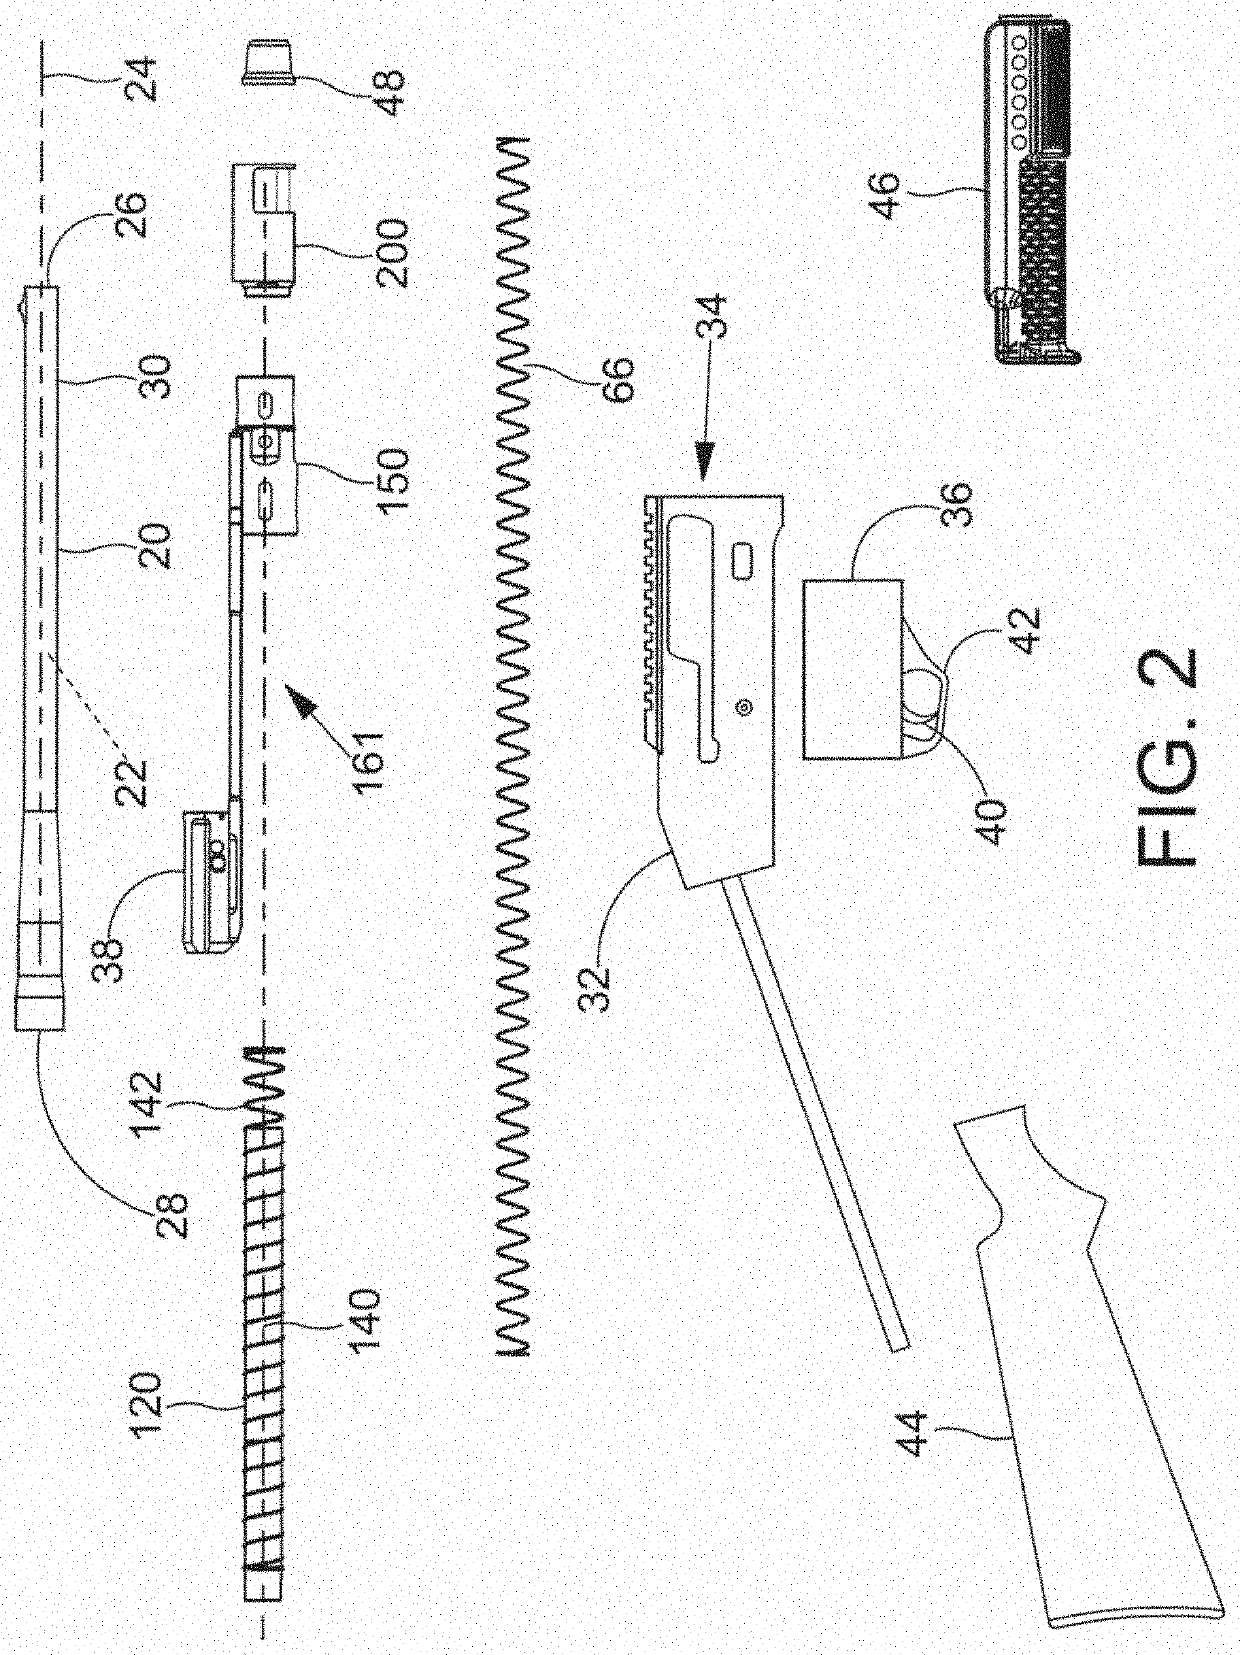 Semi-automatic shotgun and components thereof